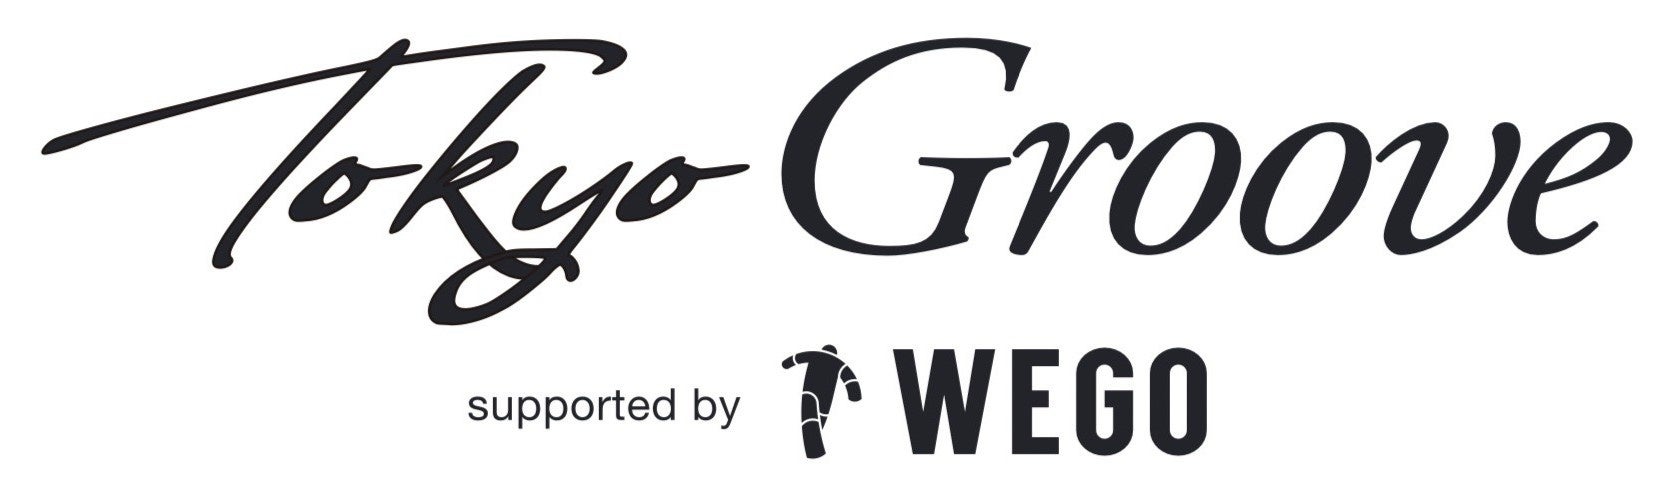 WEGO主催の音楽イベント「“TokyoGroove” supported by WEGO」第3弾開催！